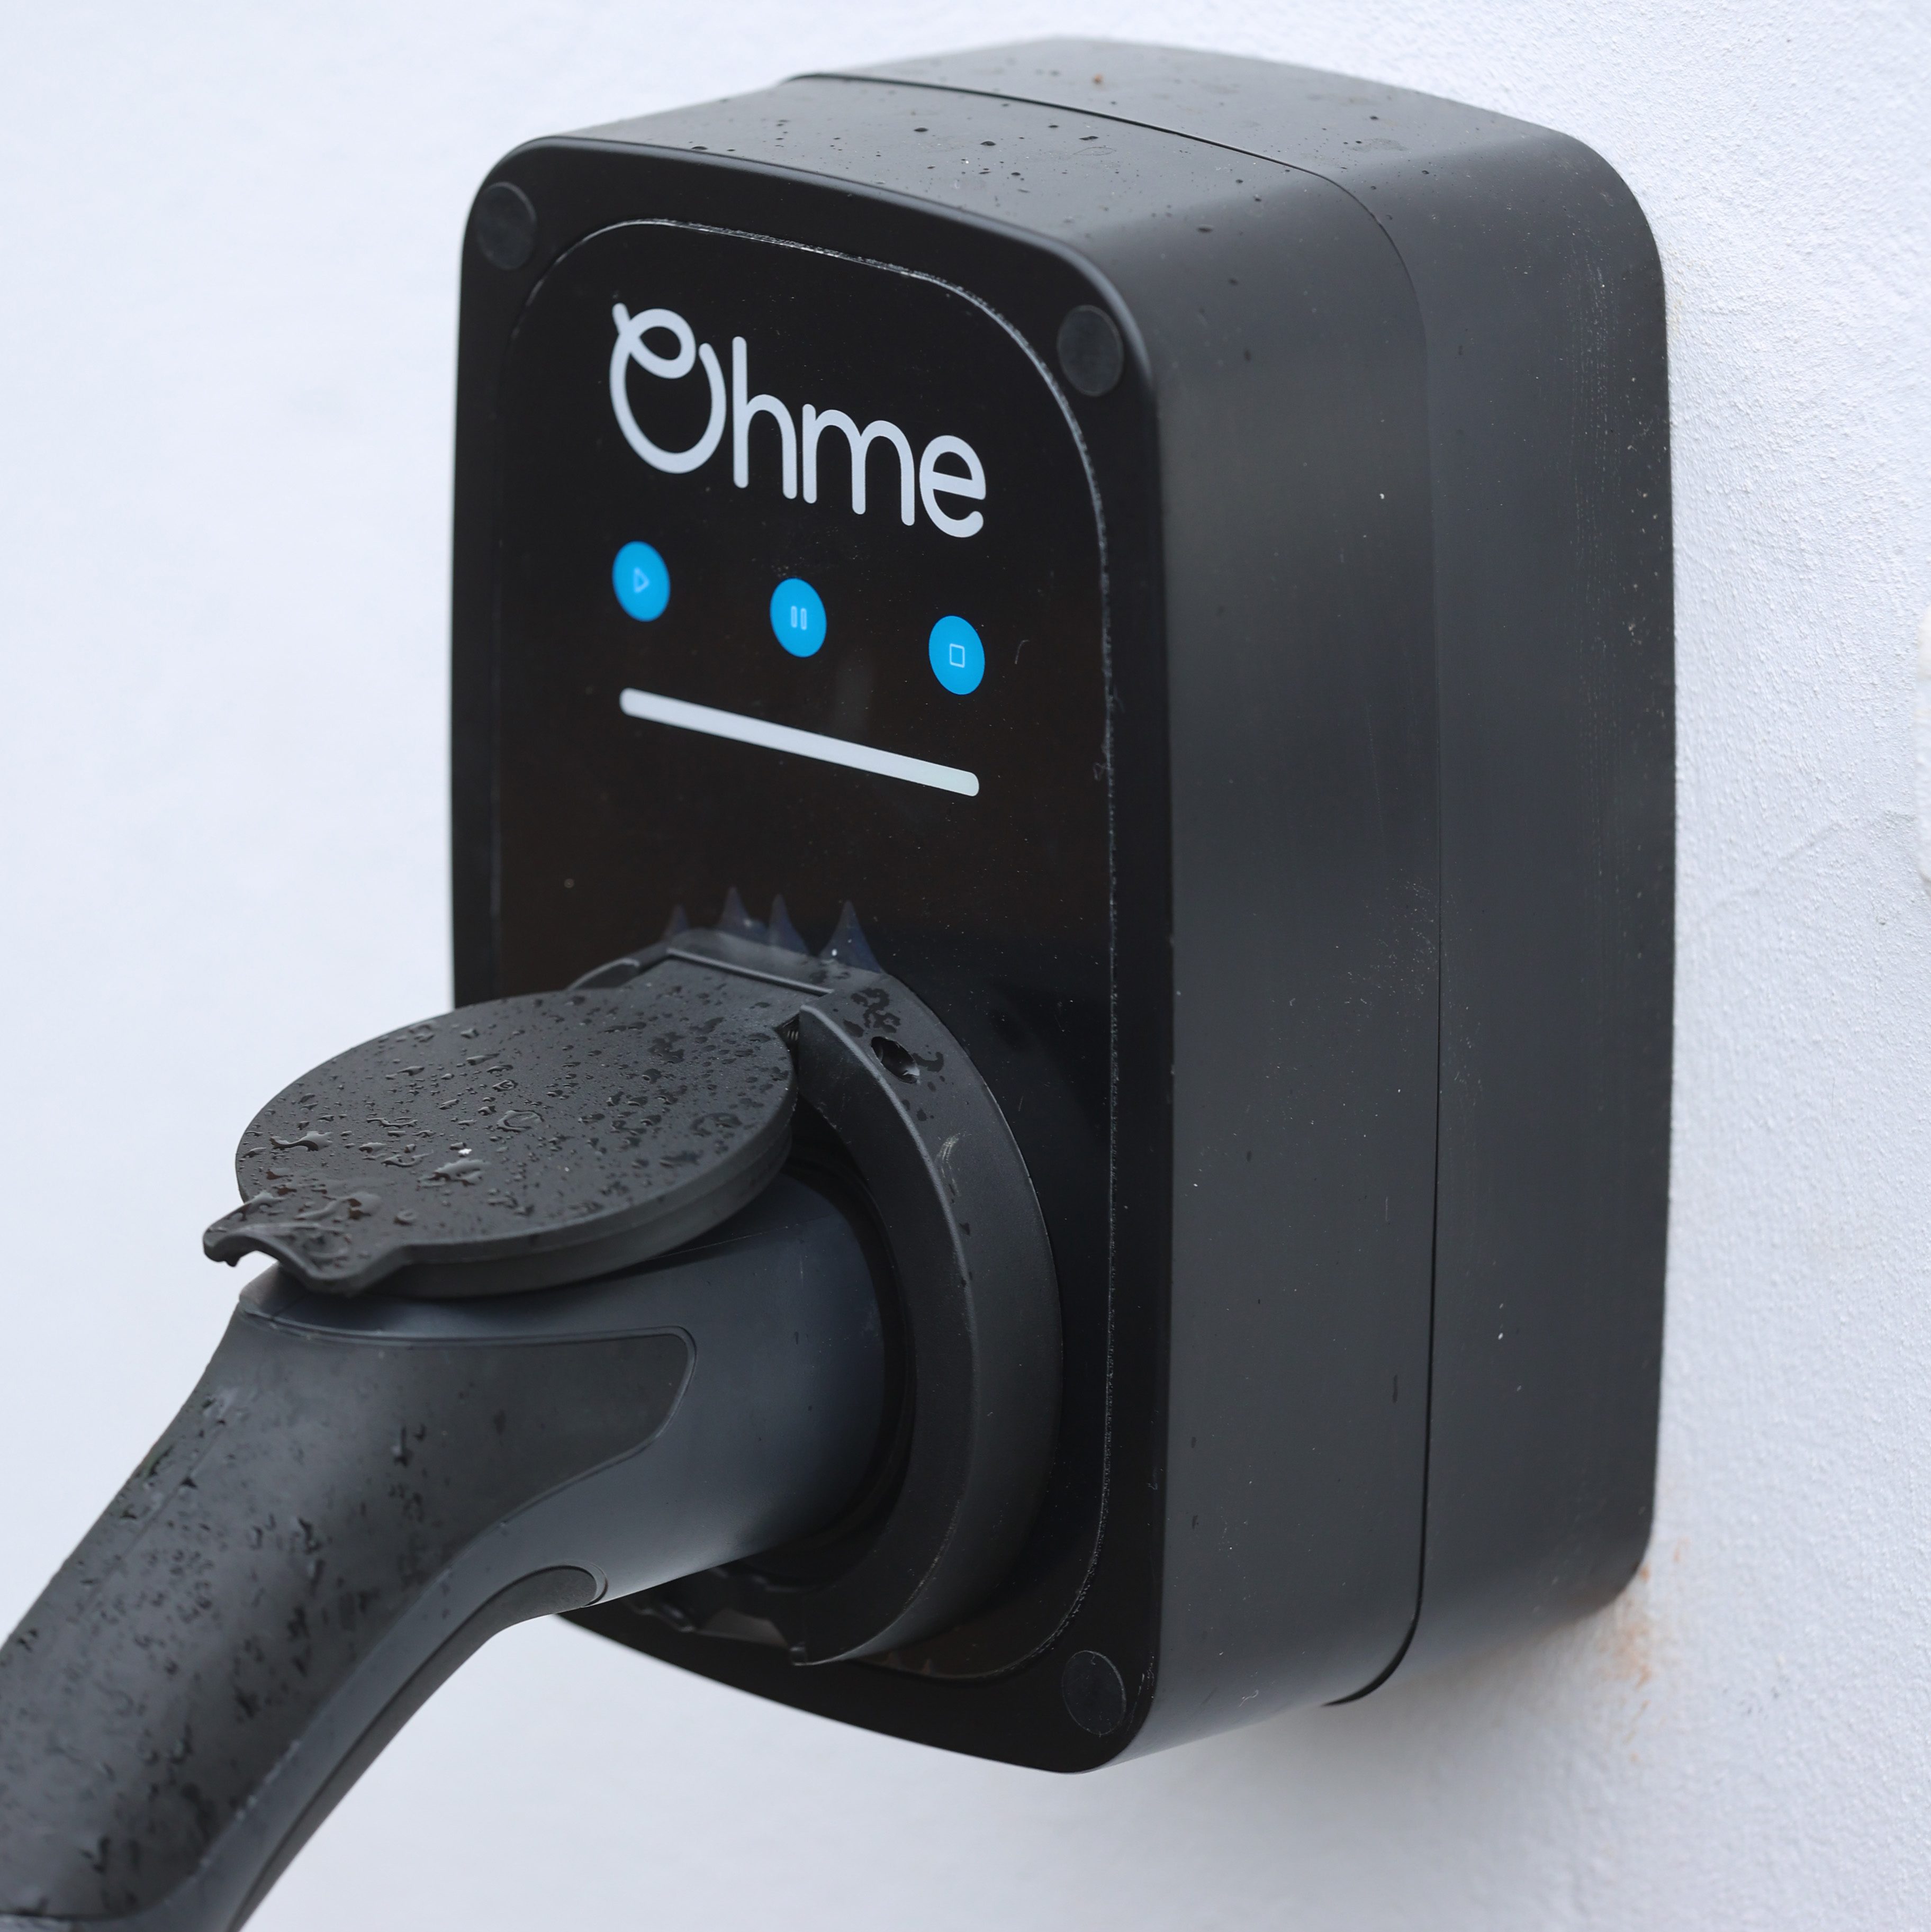 Ohme ePod electric vehicle wallbox charger